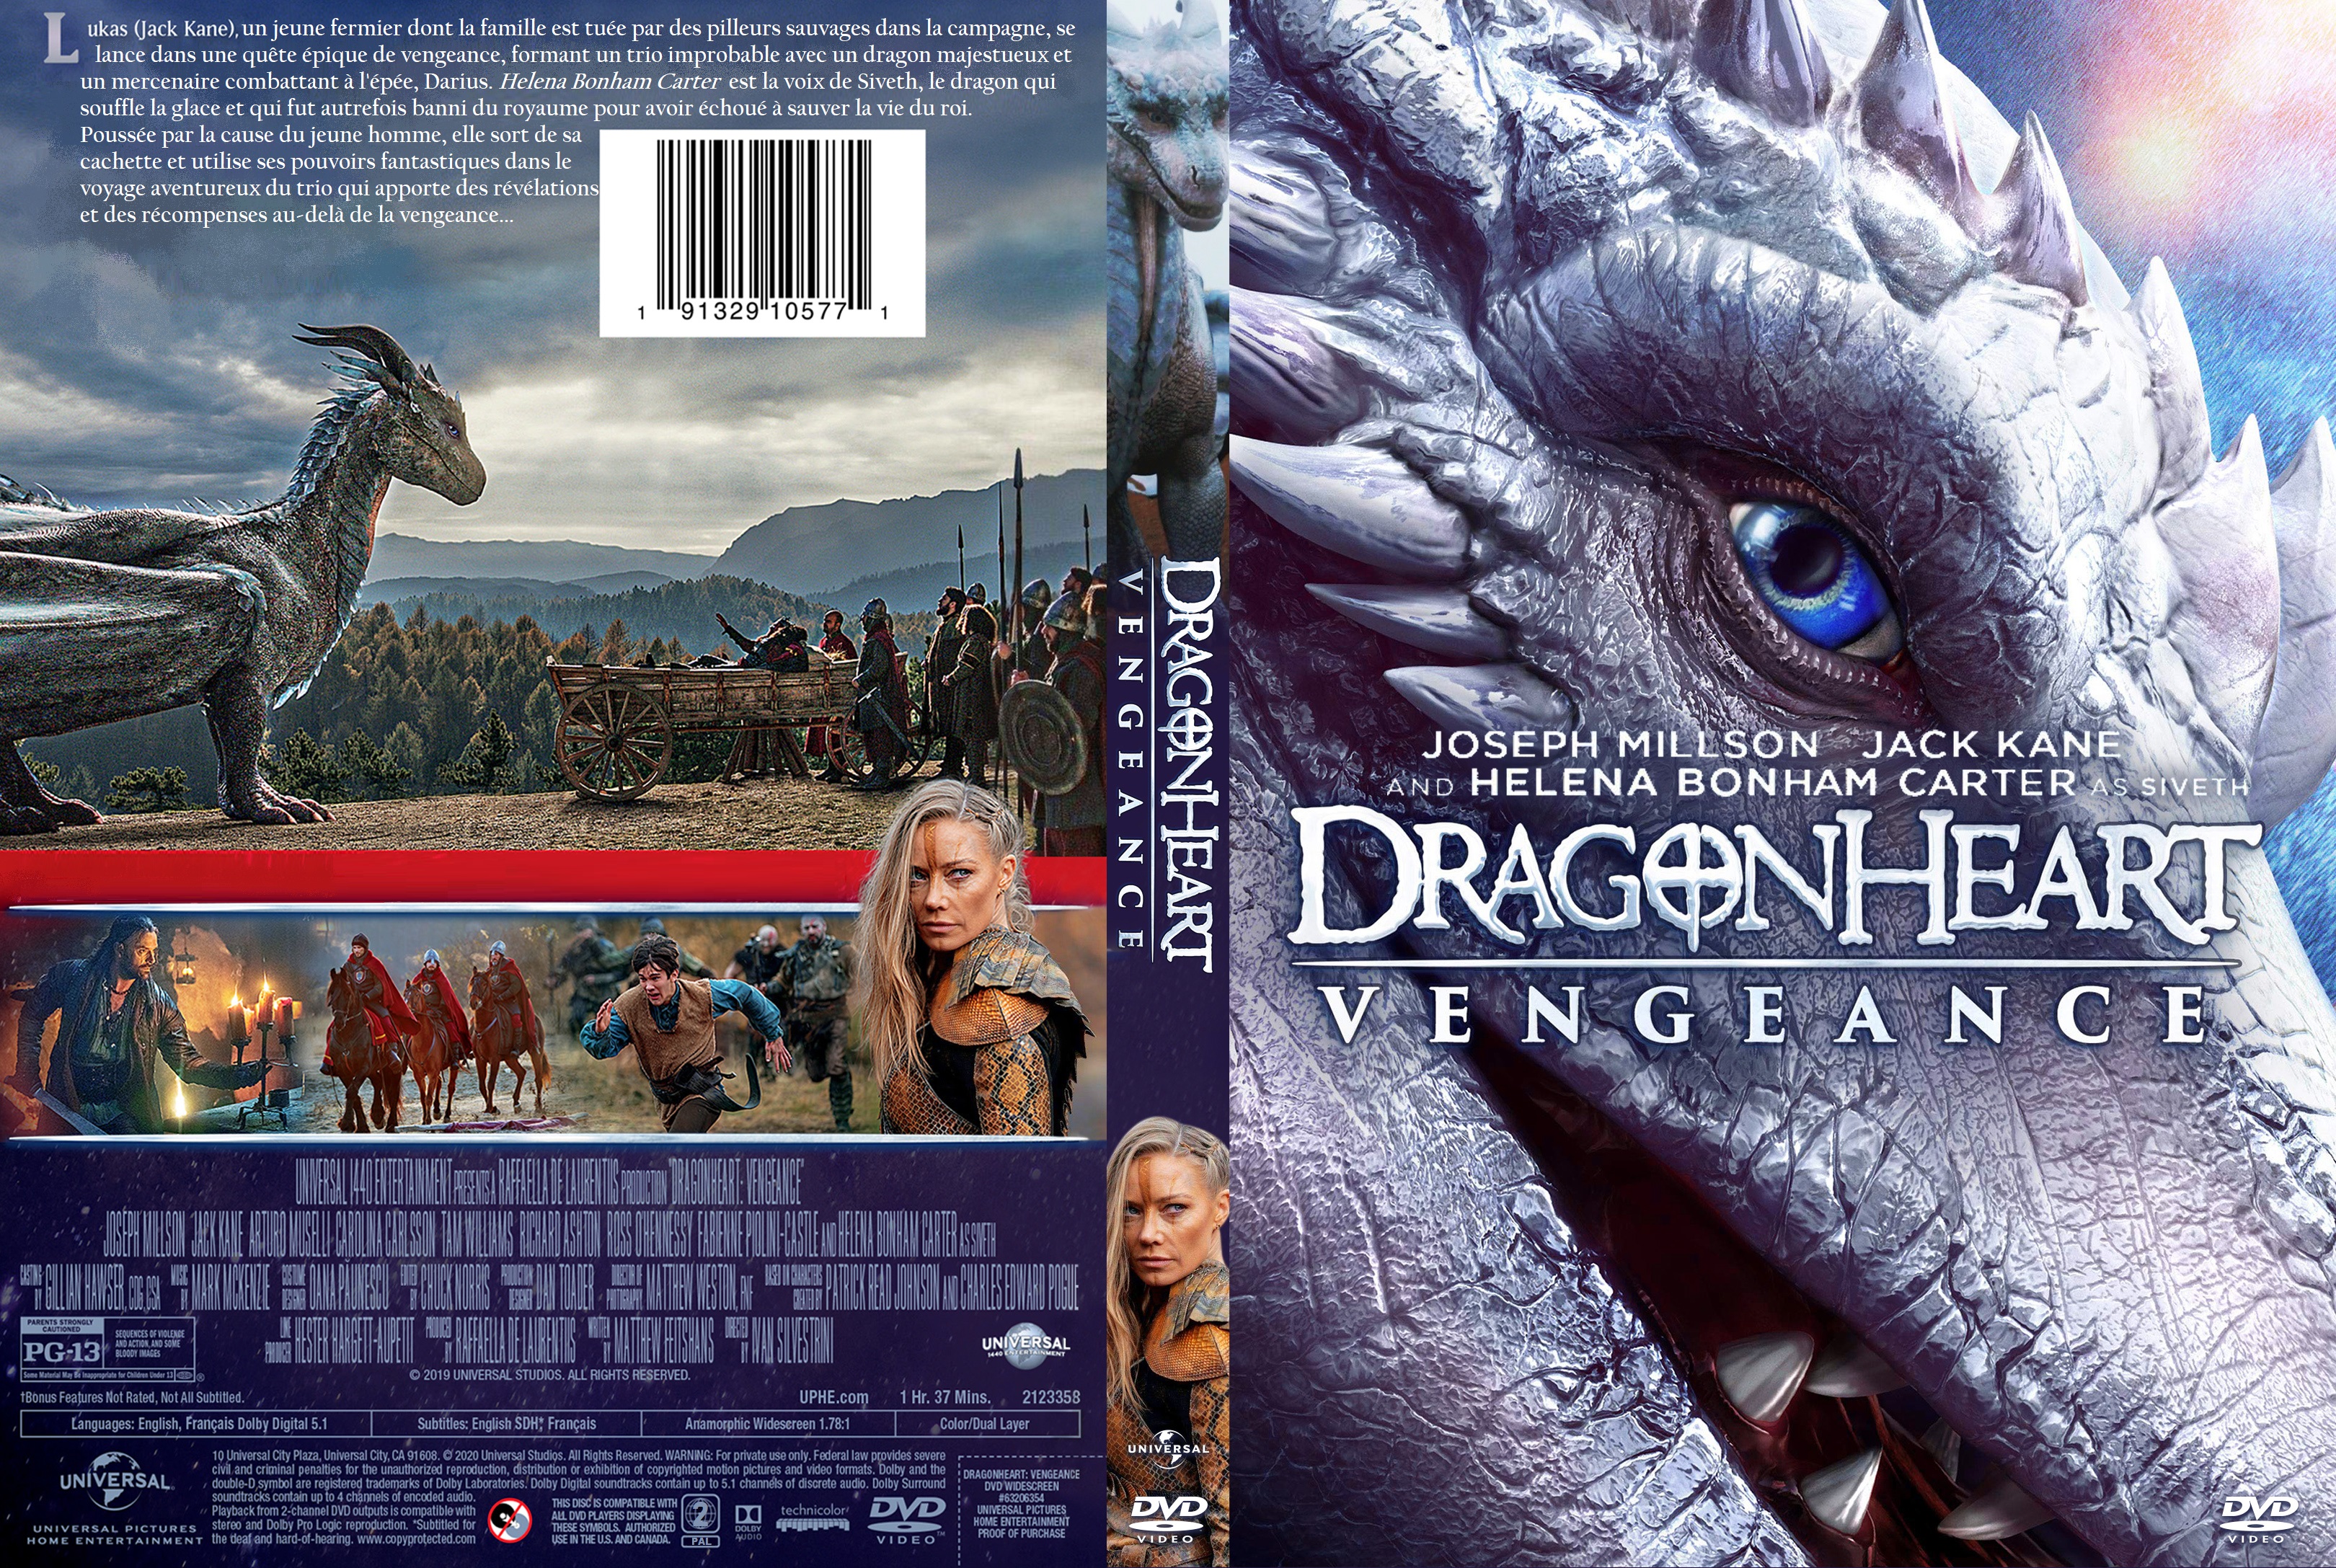 Jaquette DVD Dragonheart Vengeance custom